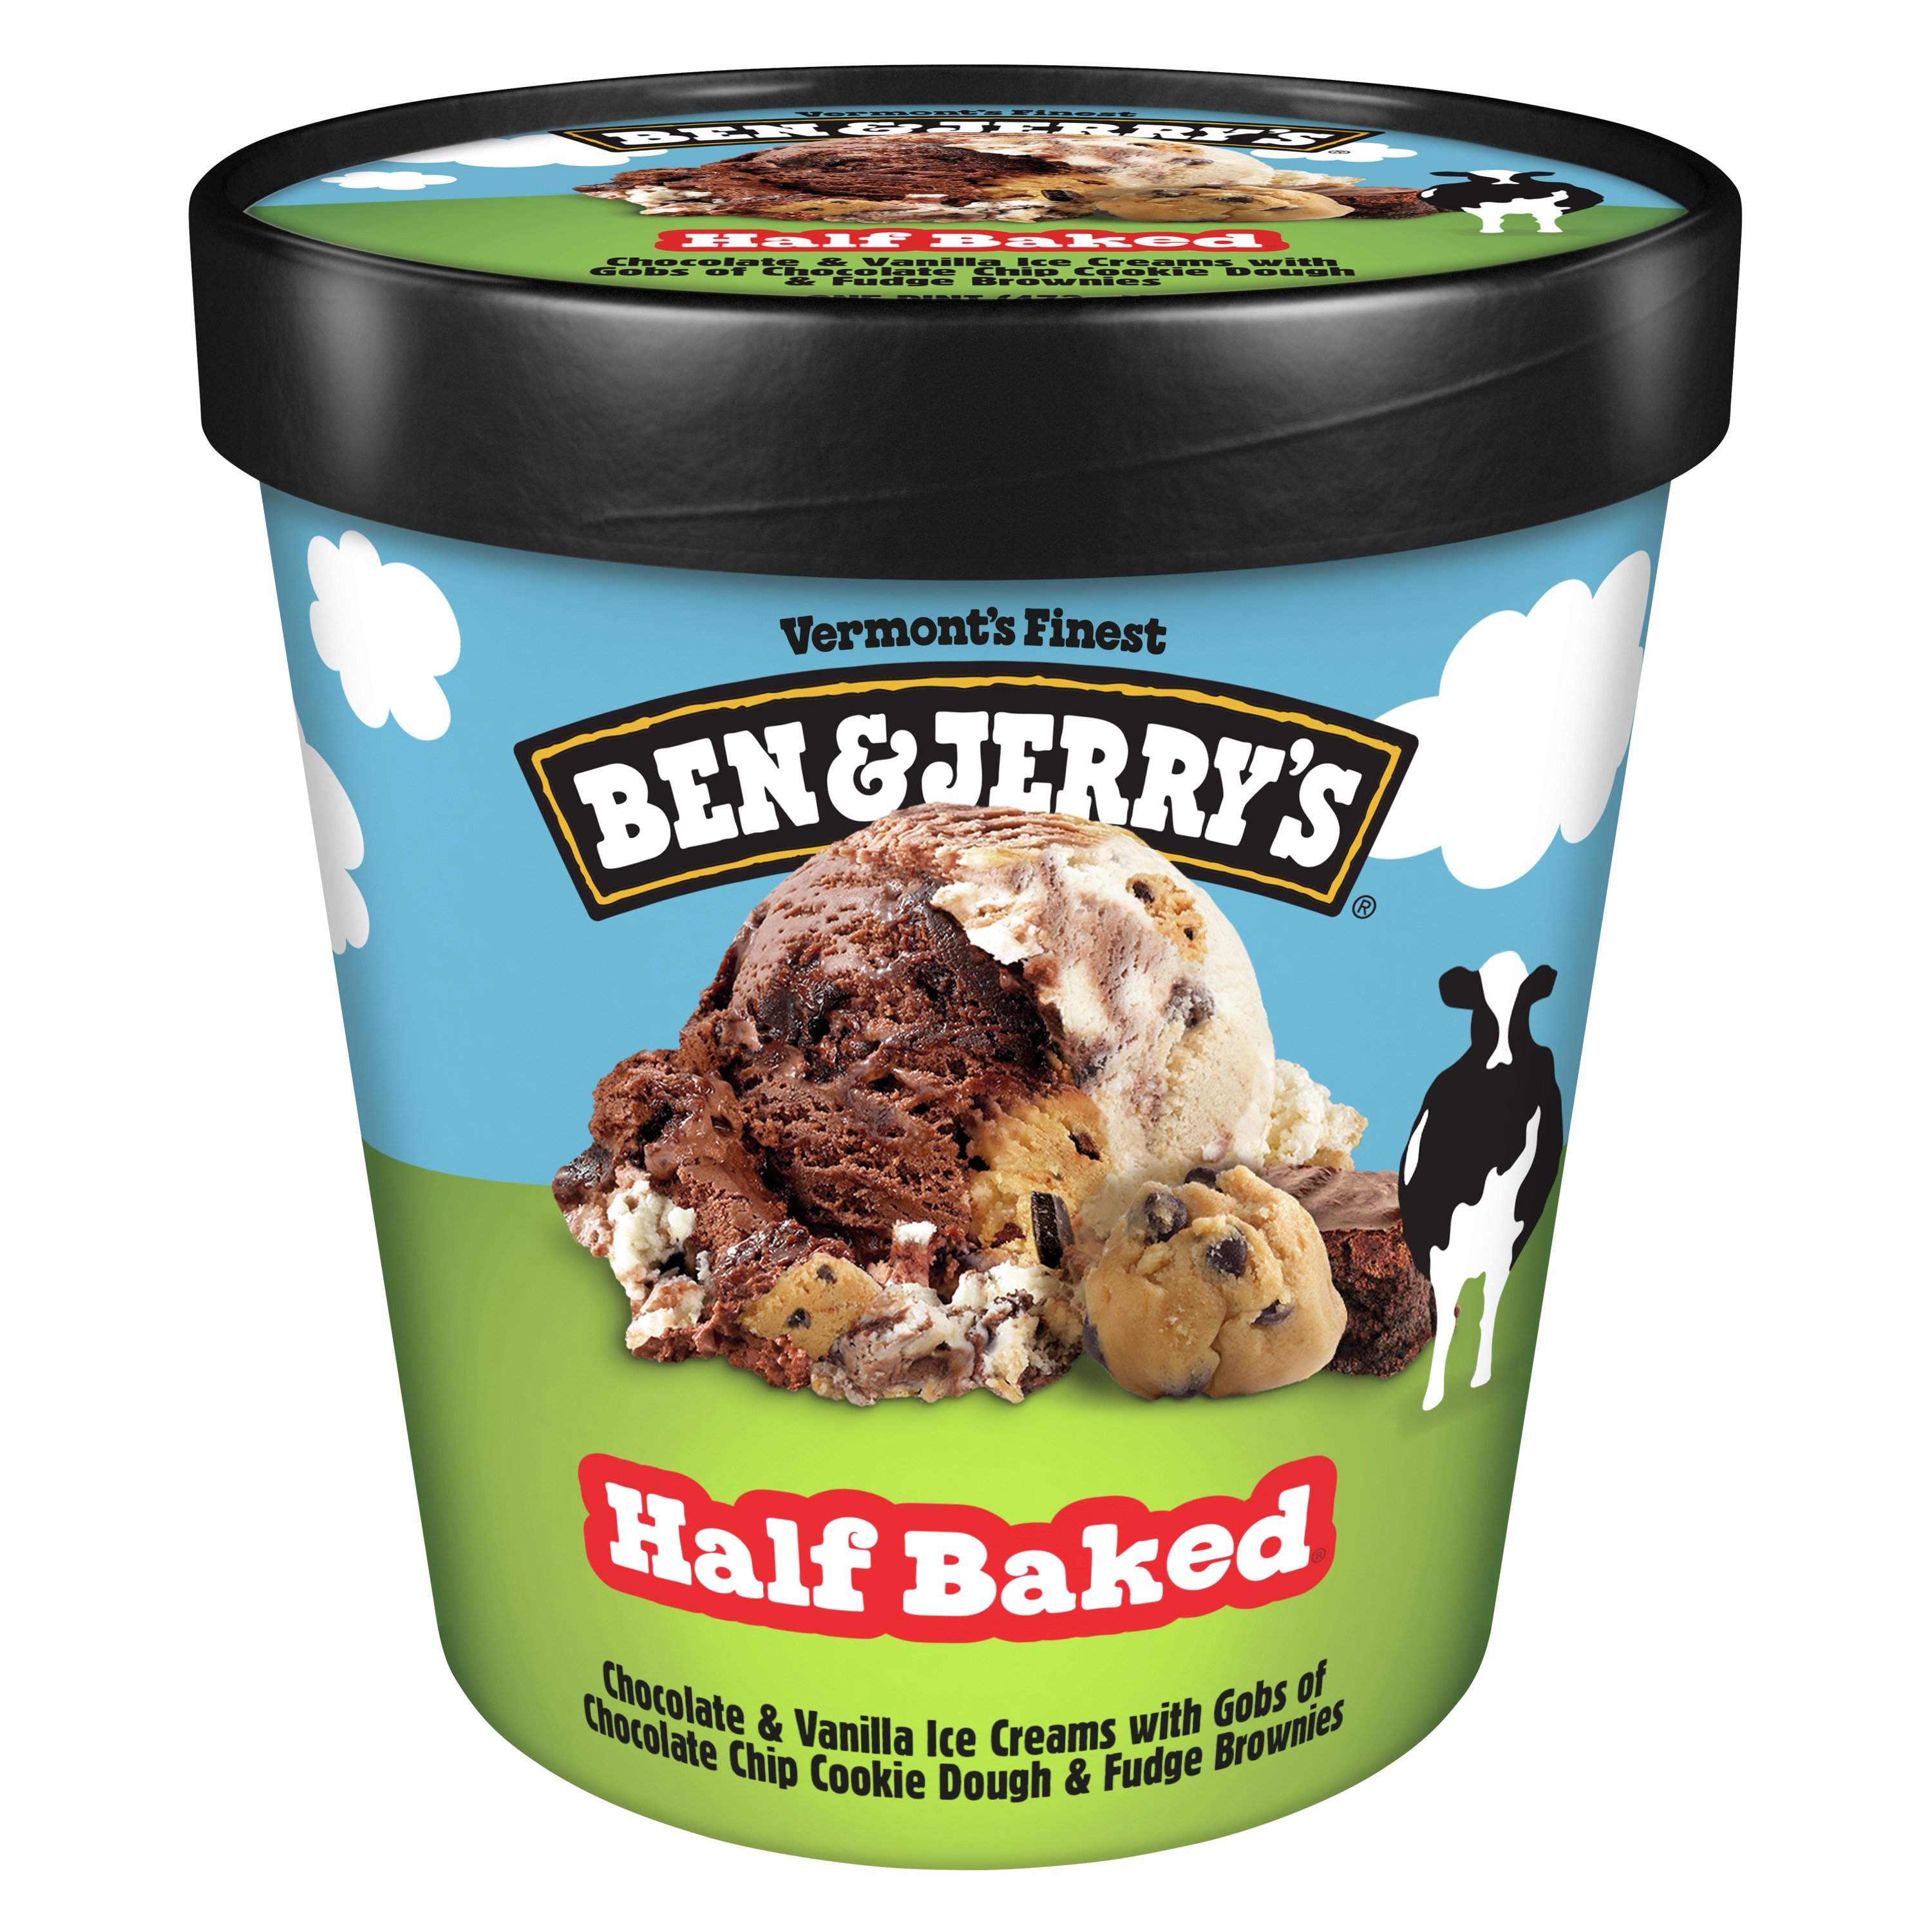 Ben & Jerry's Half Baked Ice Cream Shop Ice Cream at HEB